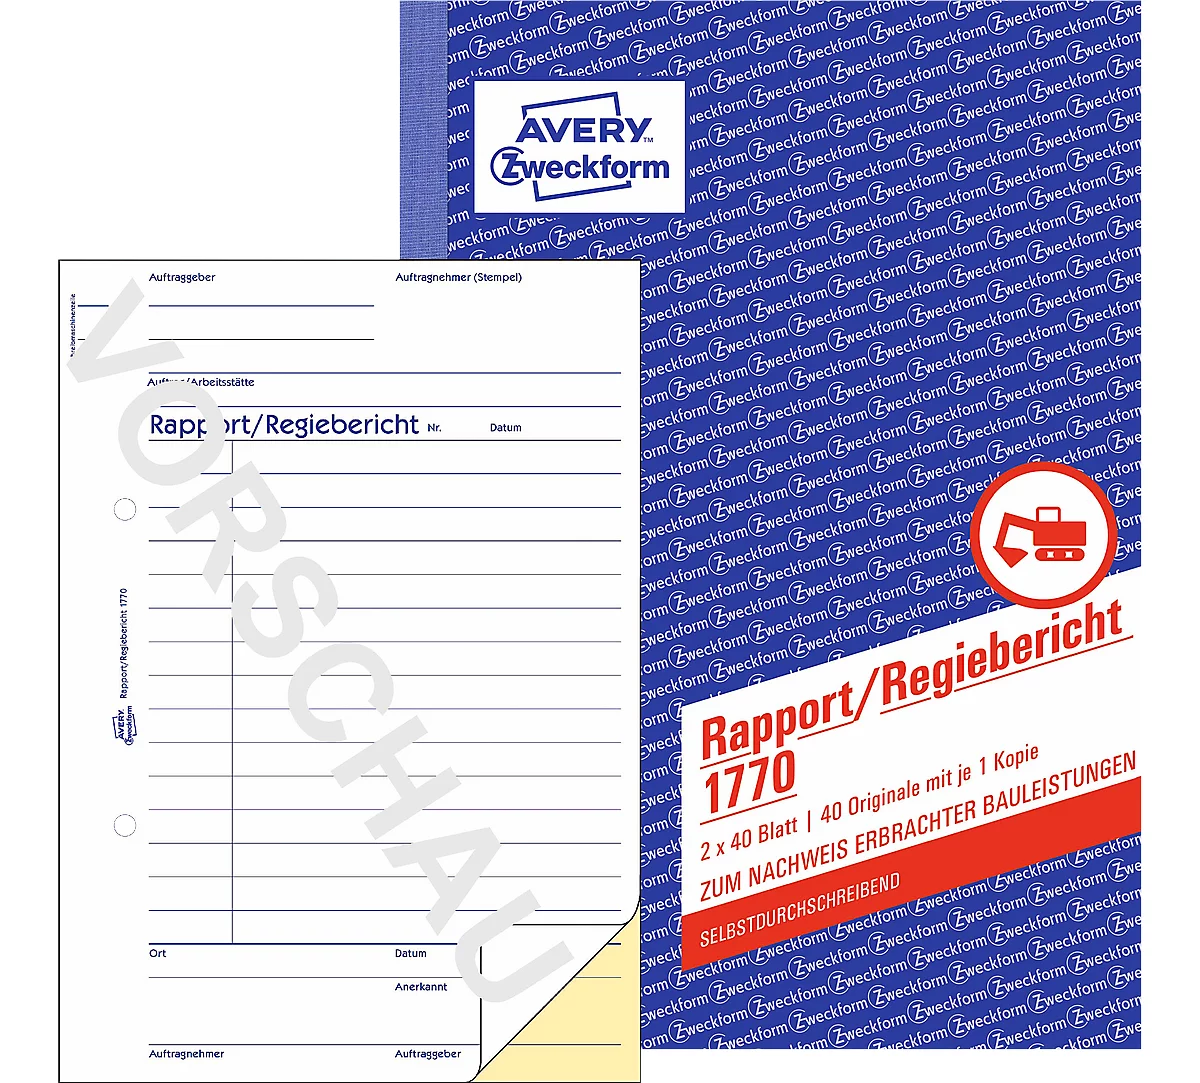 Avery Zweckform Rapport/Regiebericht Nr. 1770